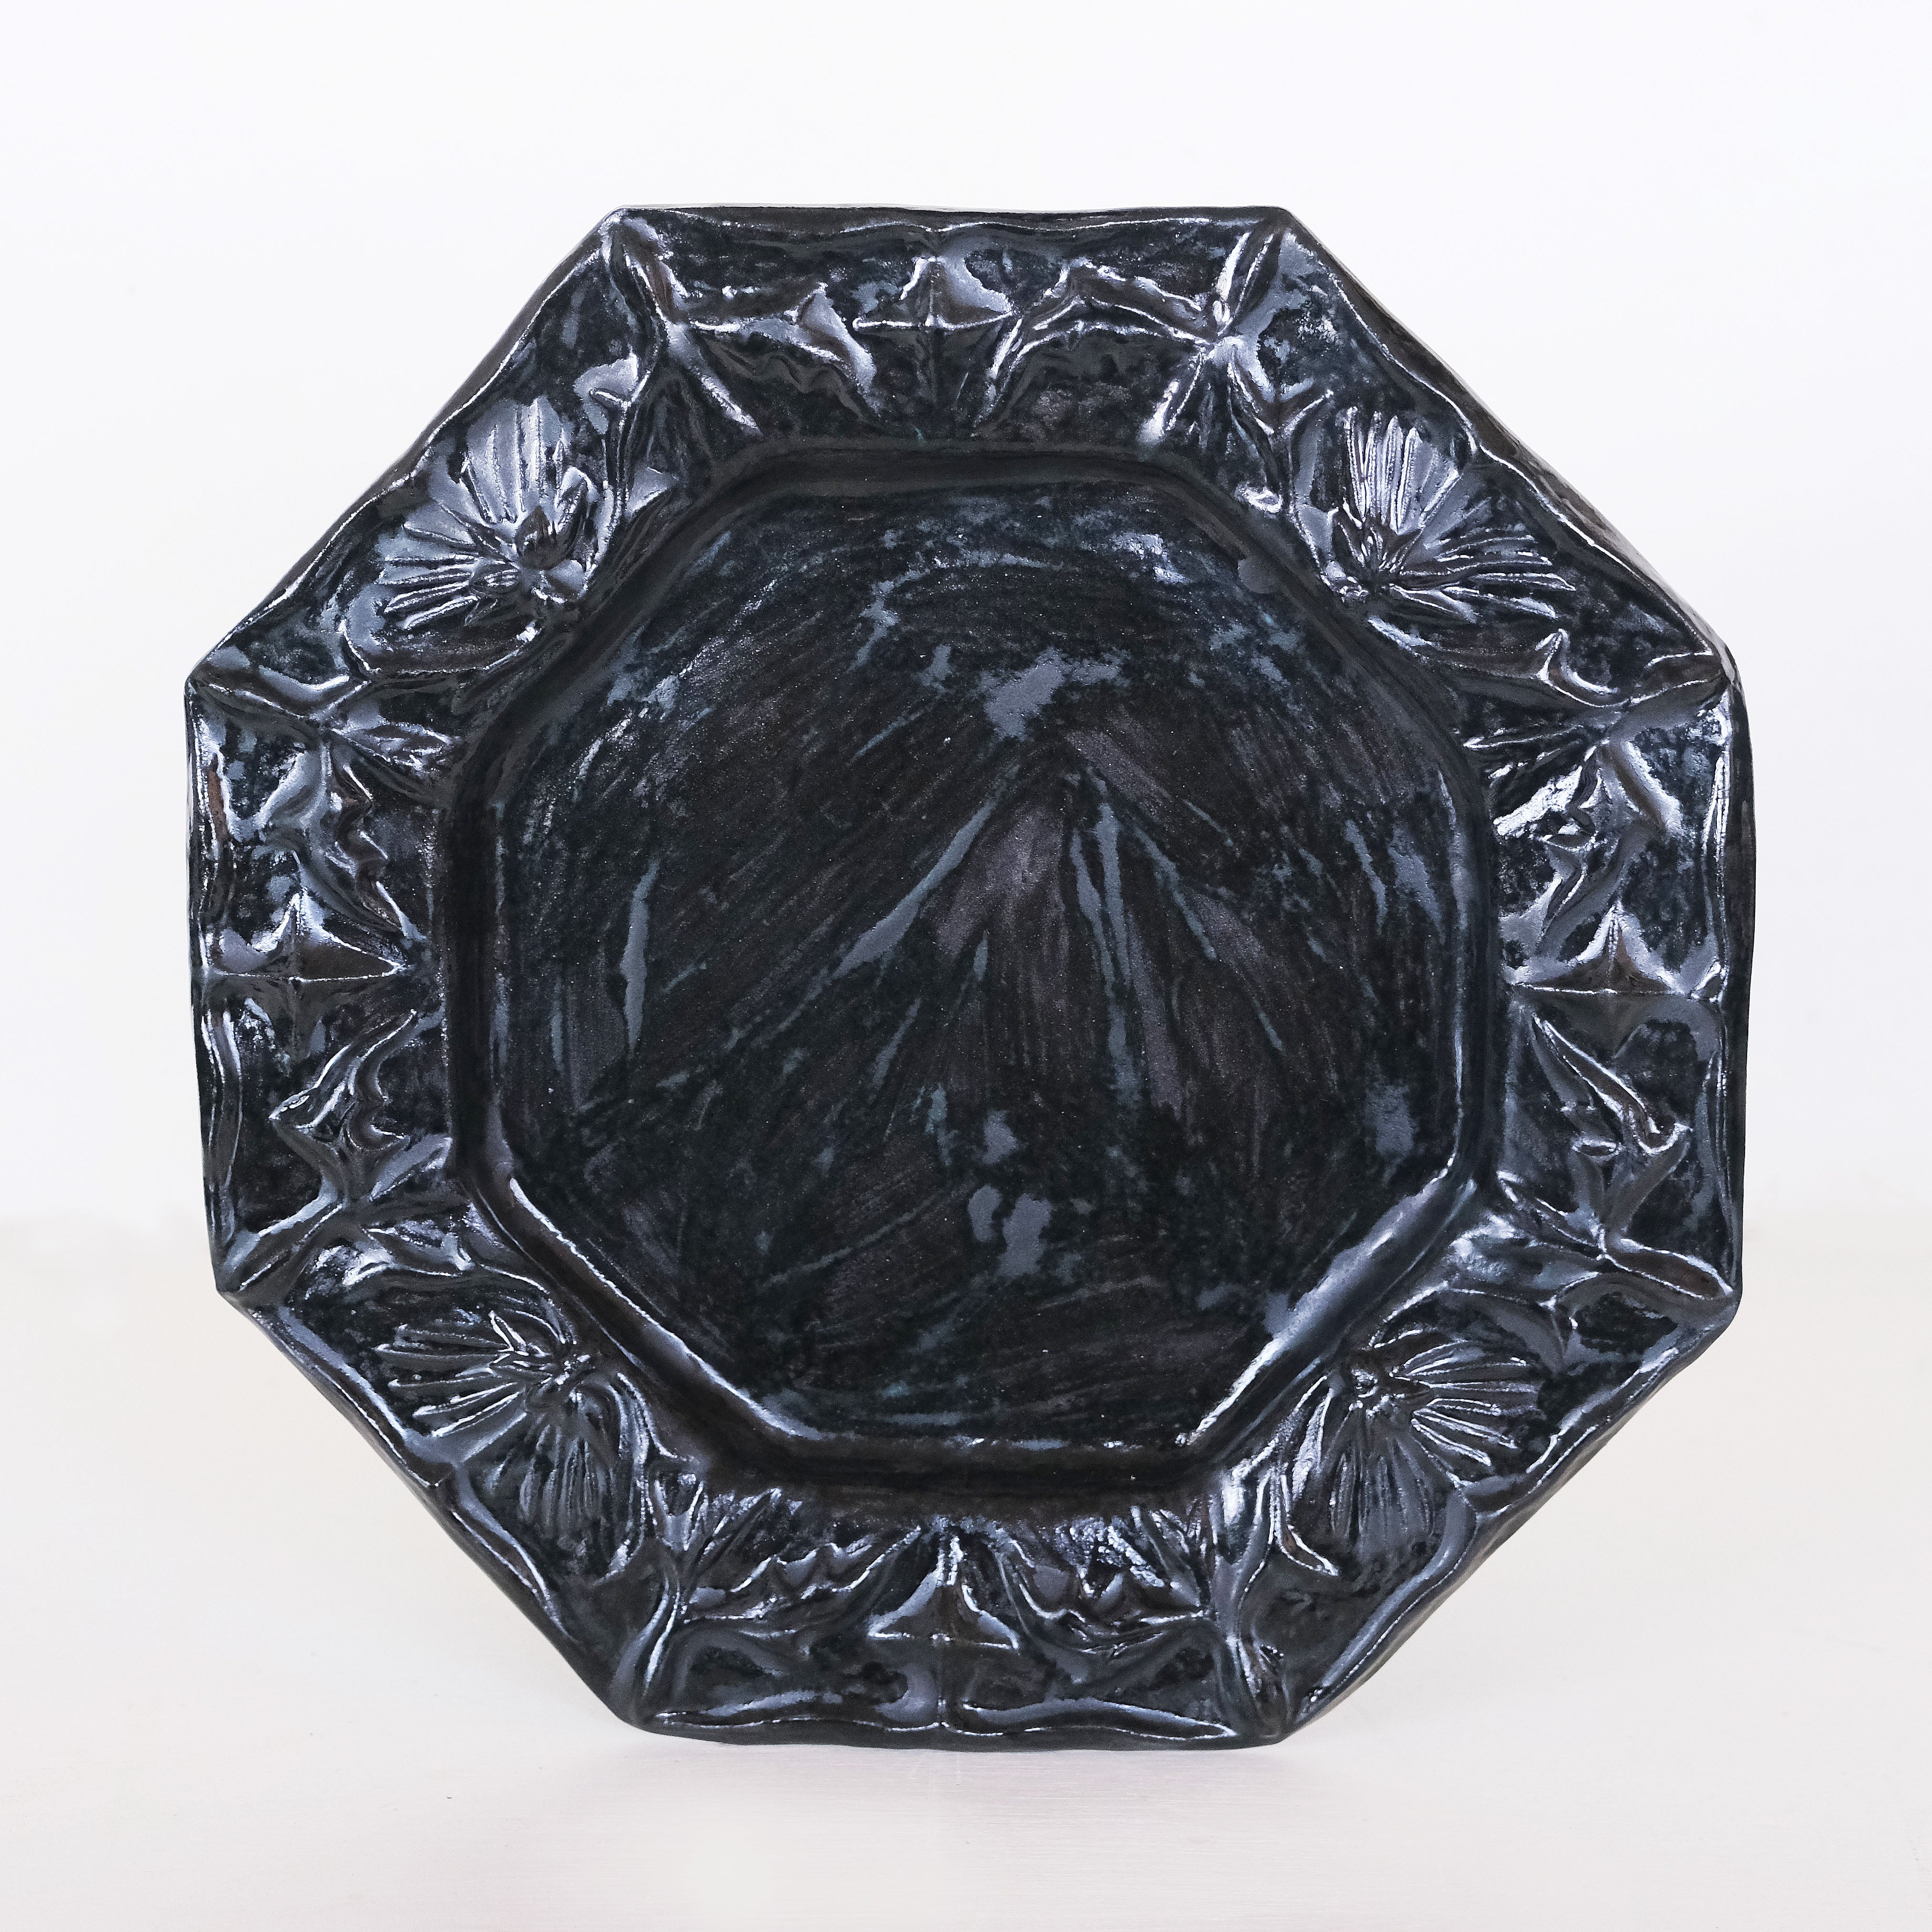 Large Black Ornate Platter